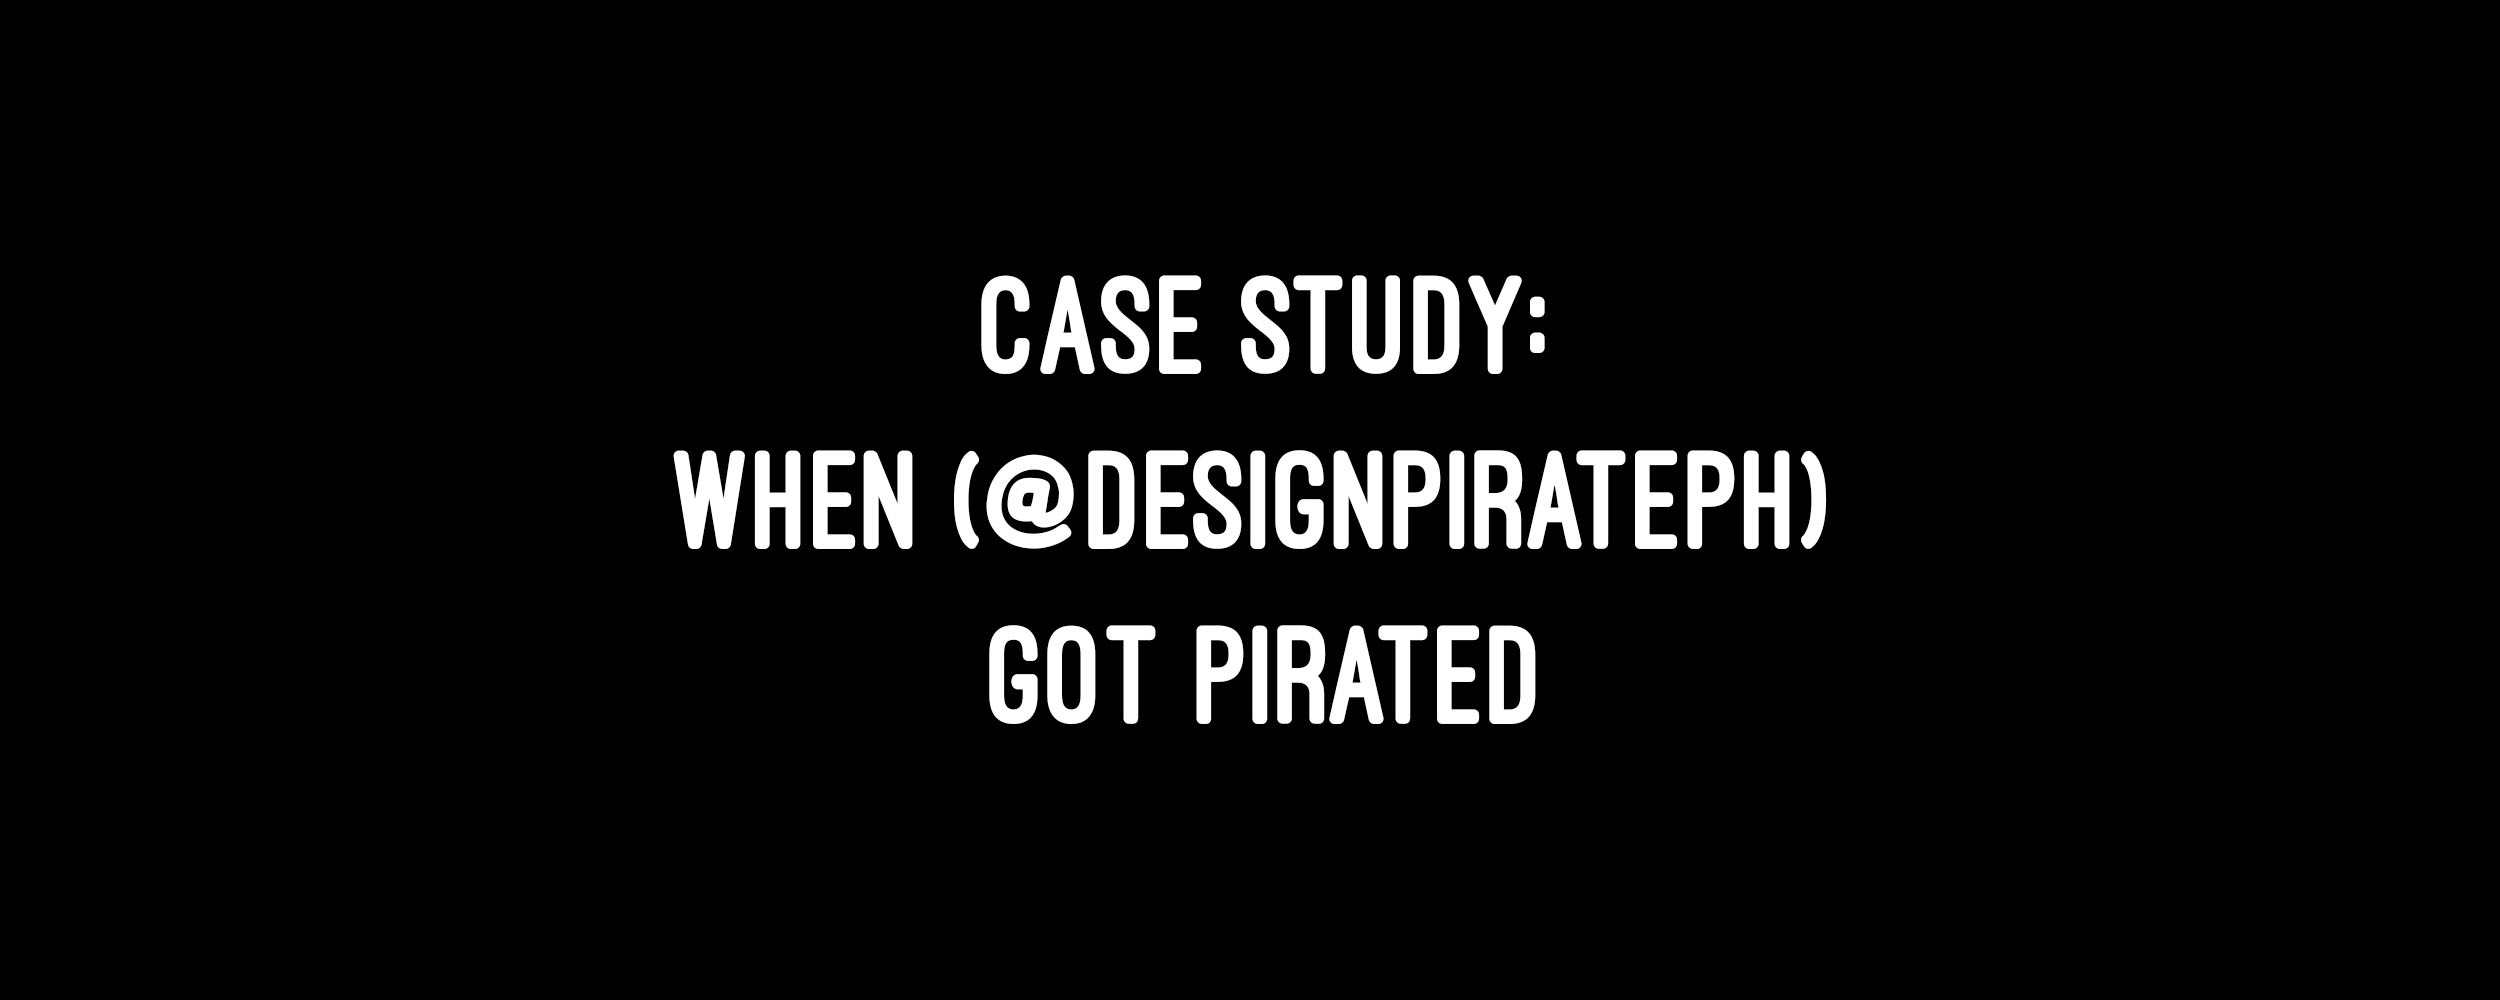 Case Study: When Design Pirate PH (@designpirateph) literally got pirated.